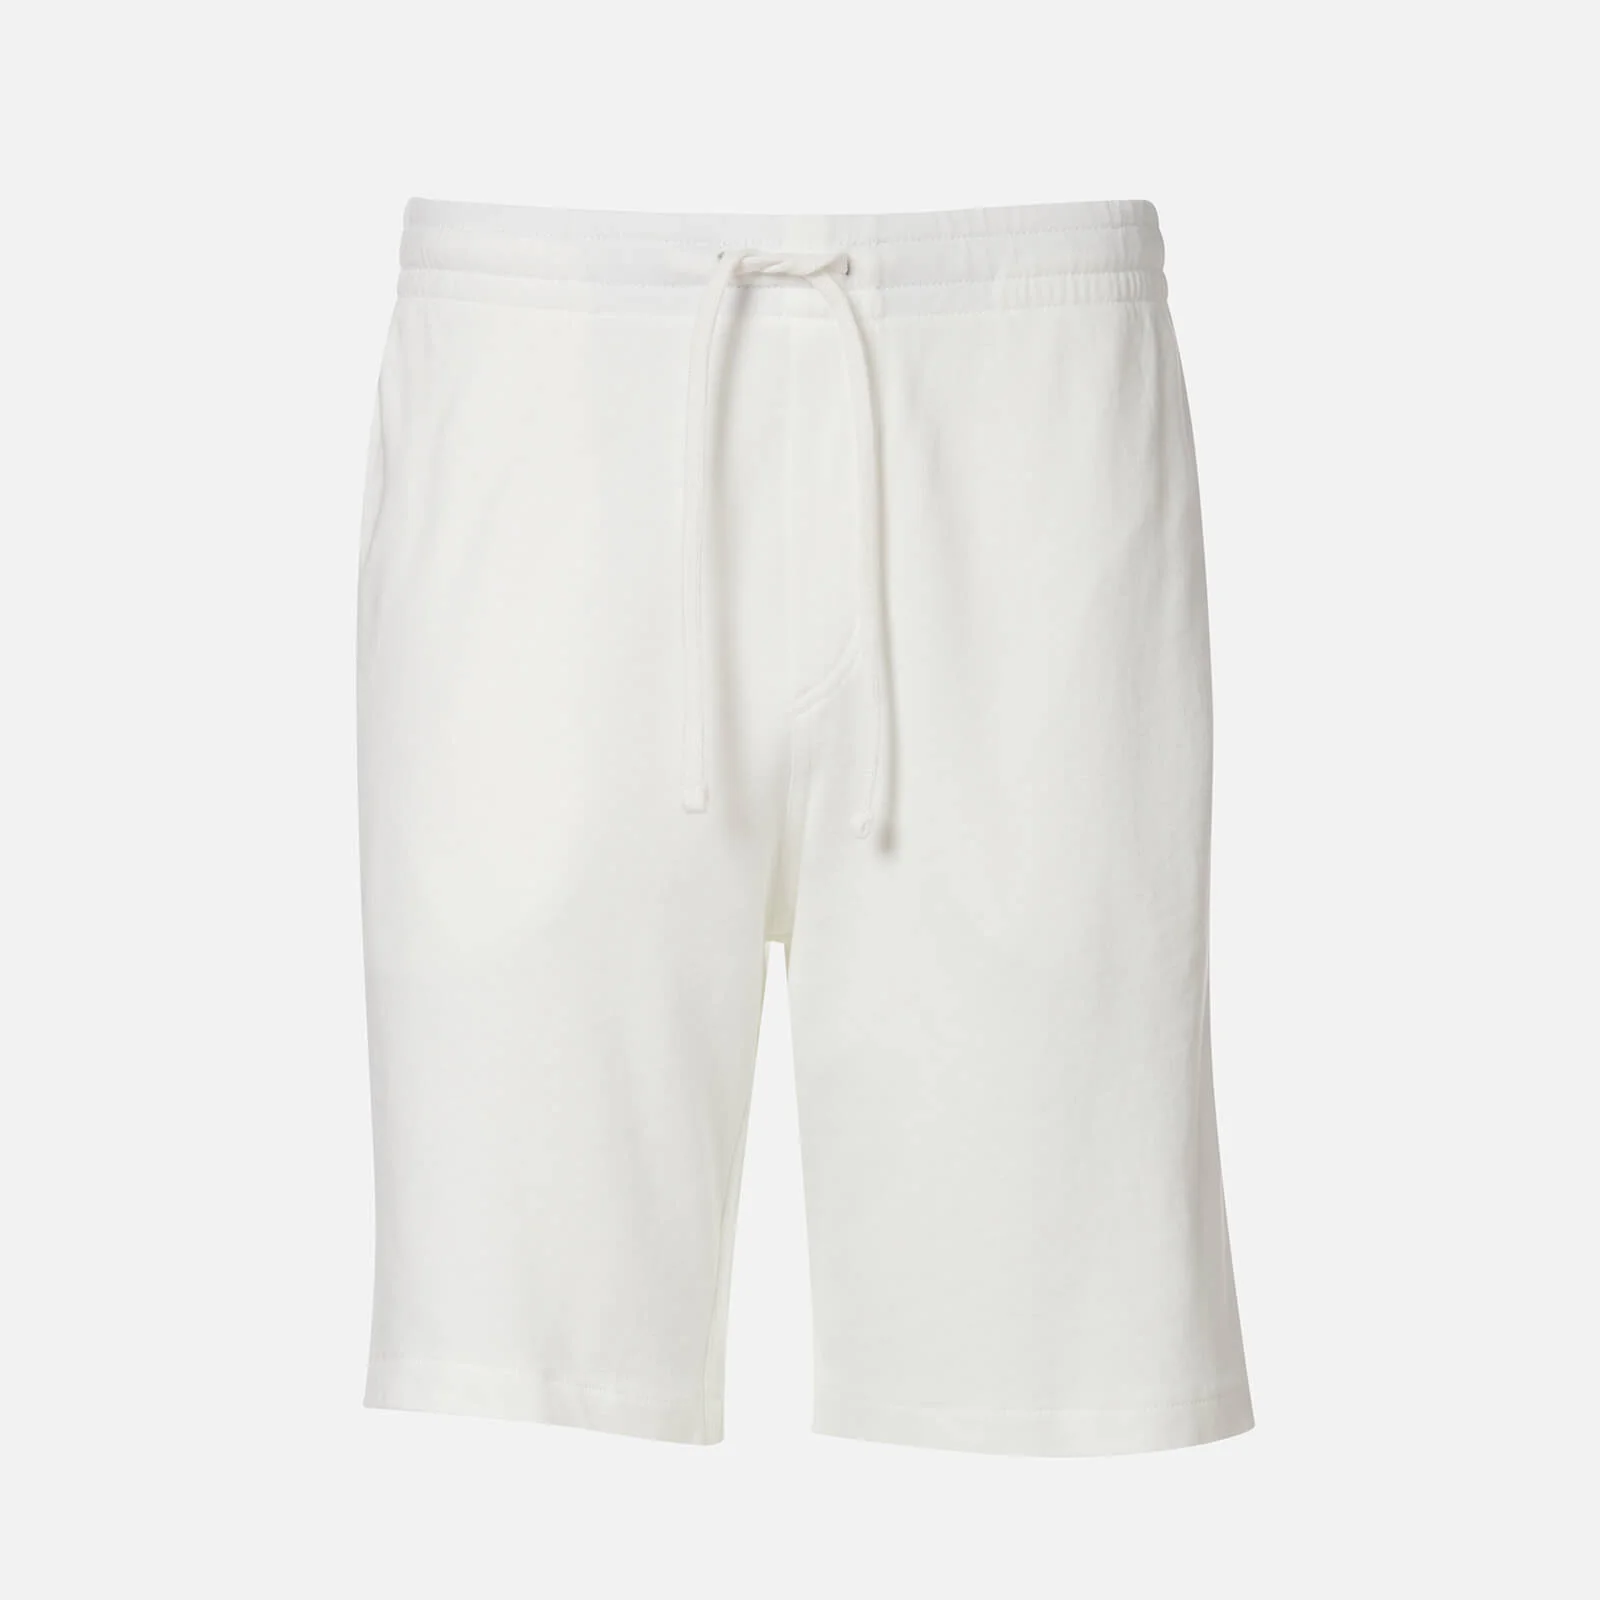 Polo Ralph Lauren Men's Shorts - White Image 1